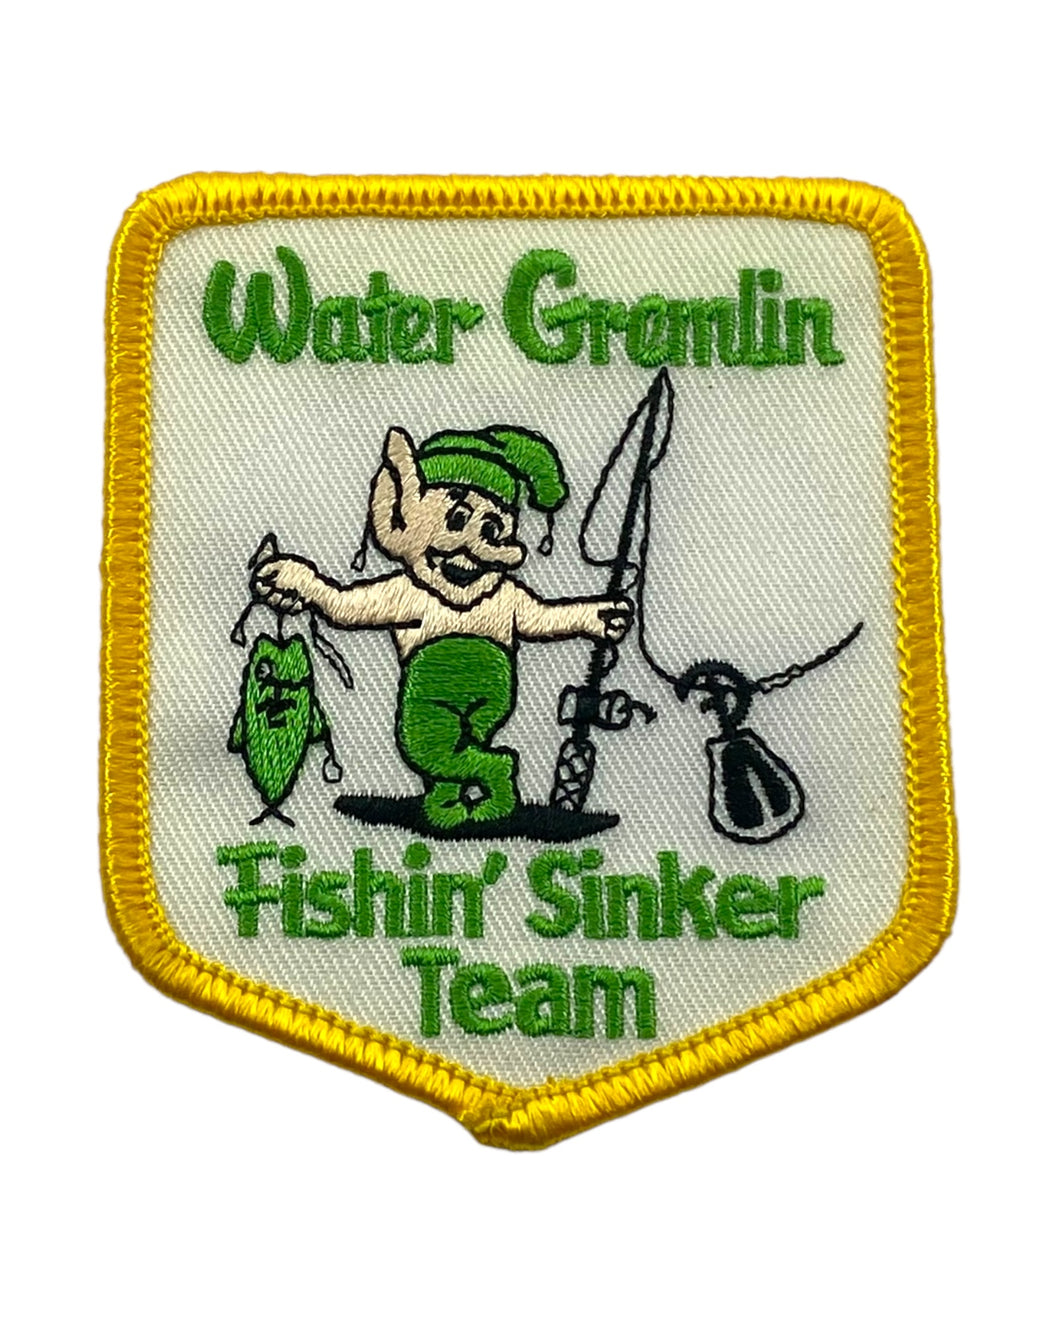 WATER GREMLIN FISHING SINKER TEAM Vintage Patch